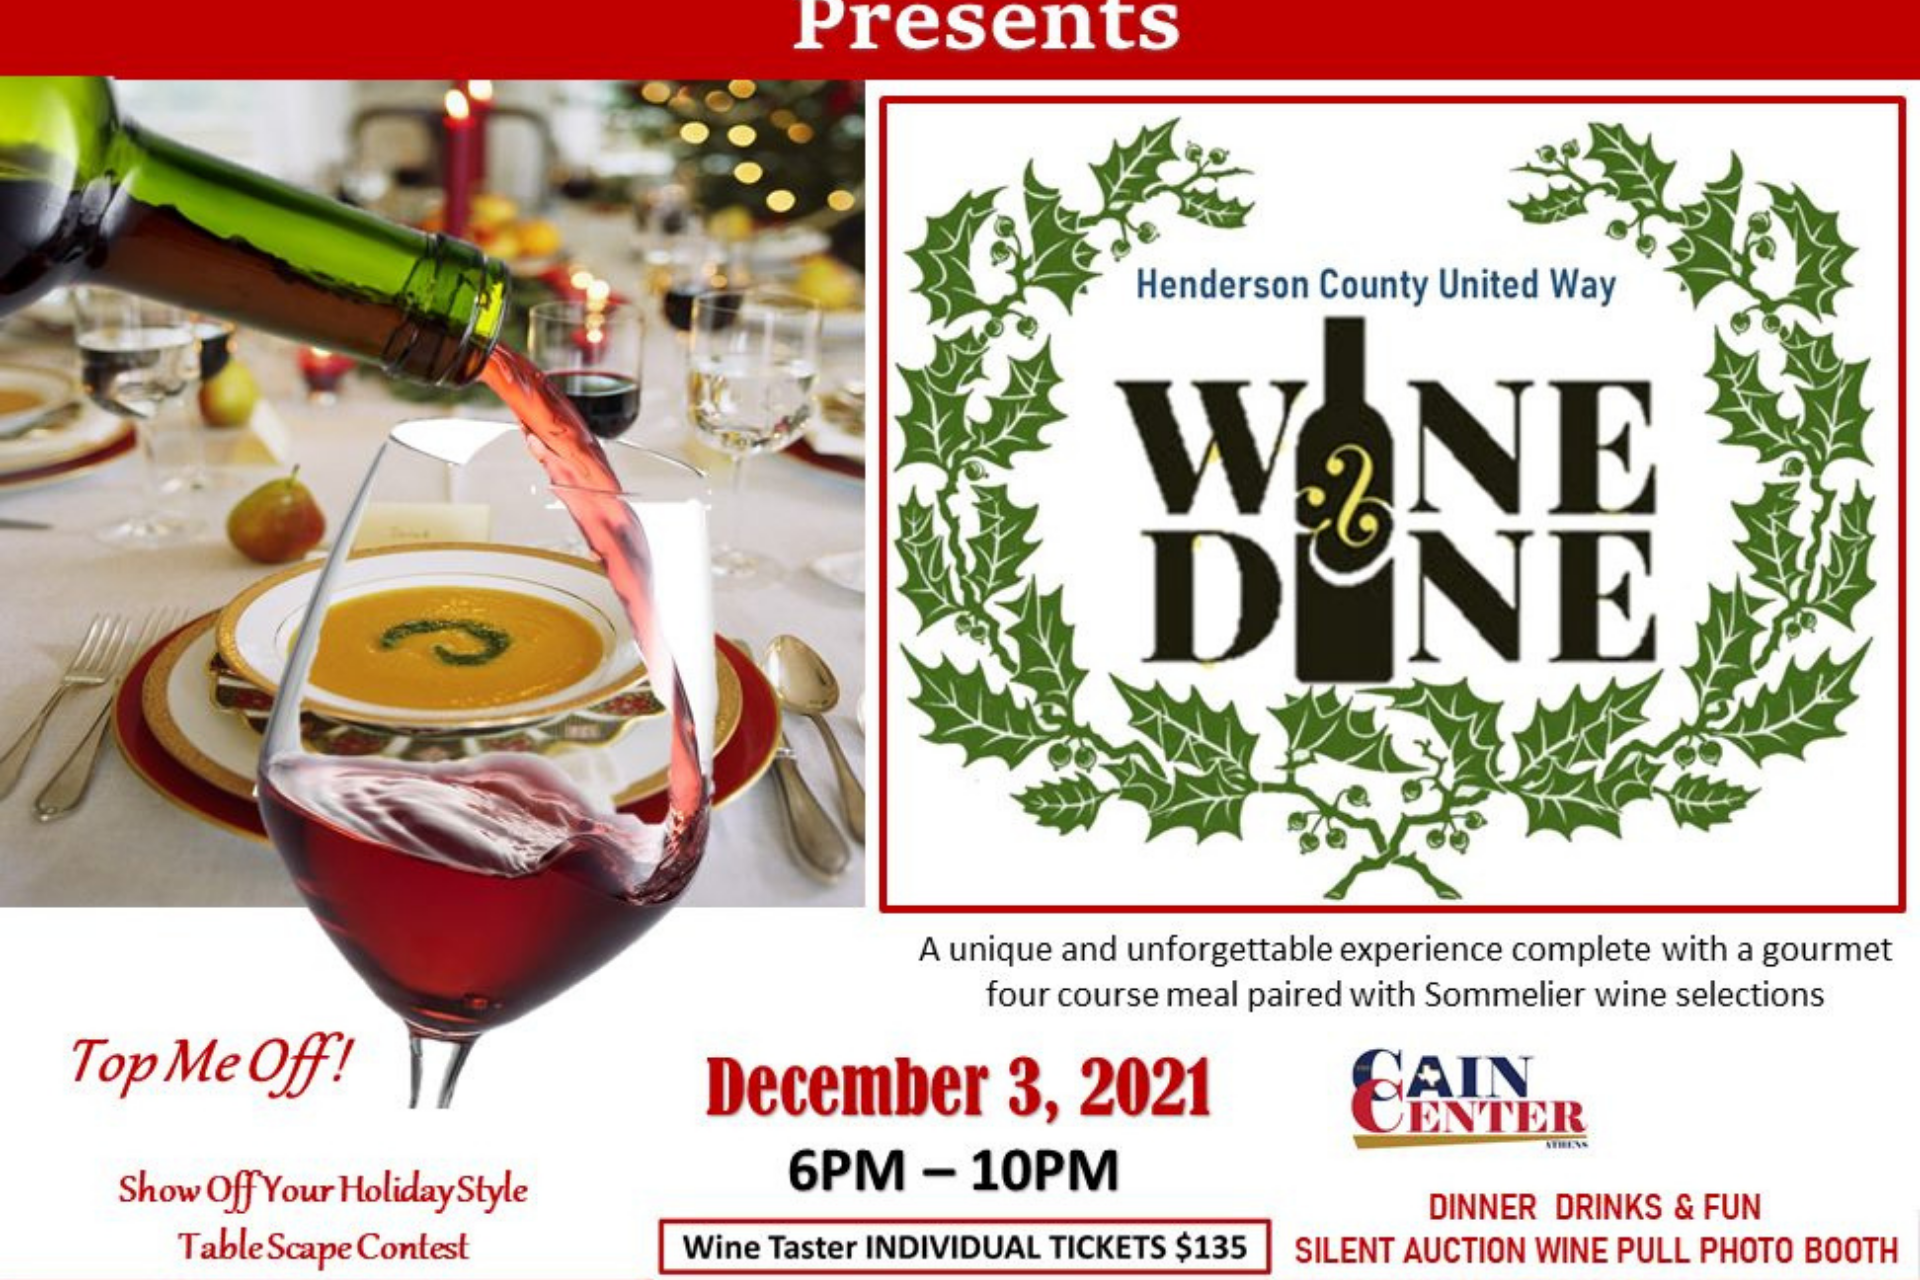 Henderson County United Way Wine & Dine